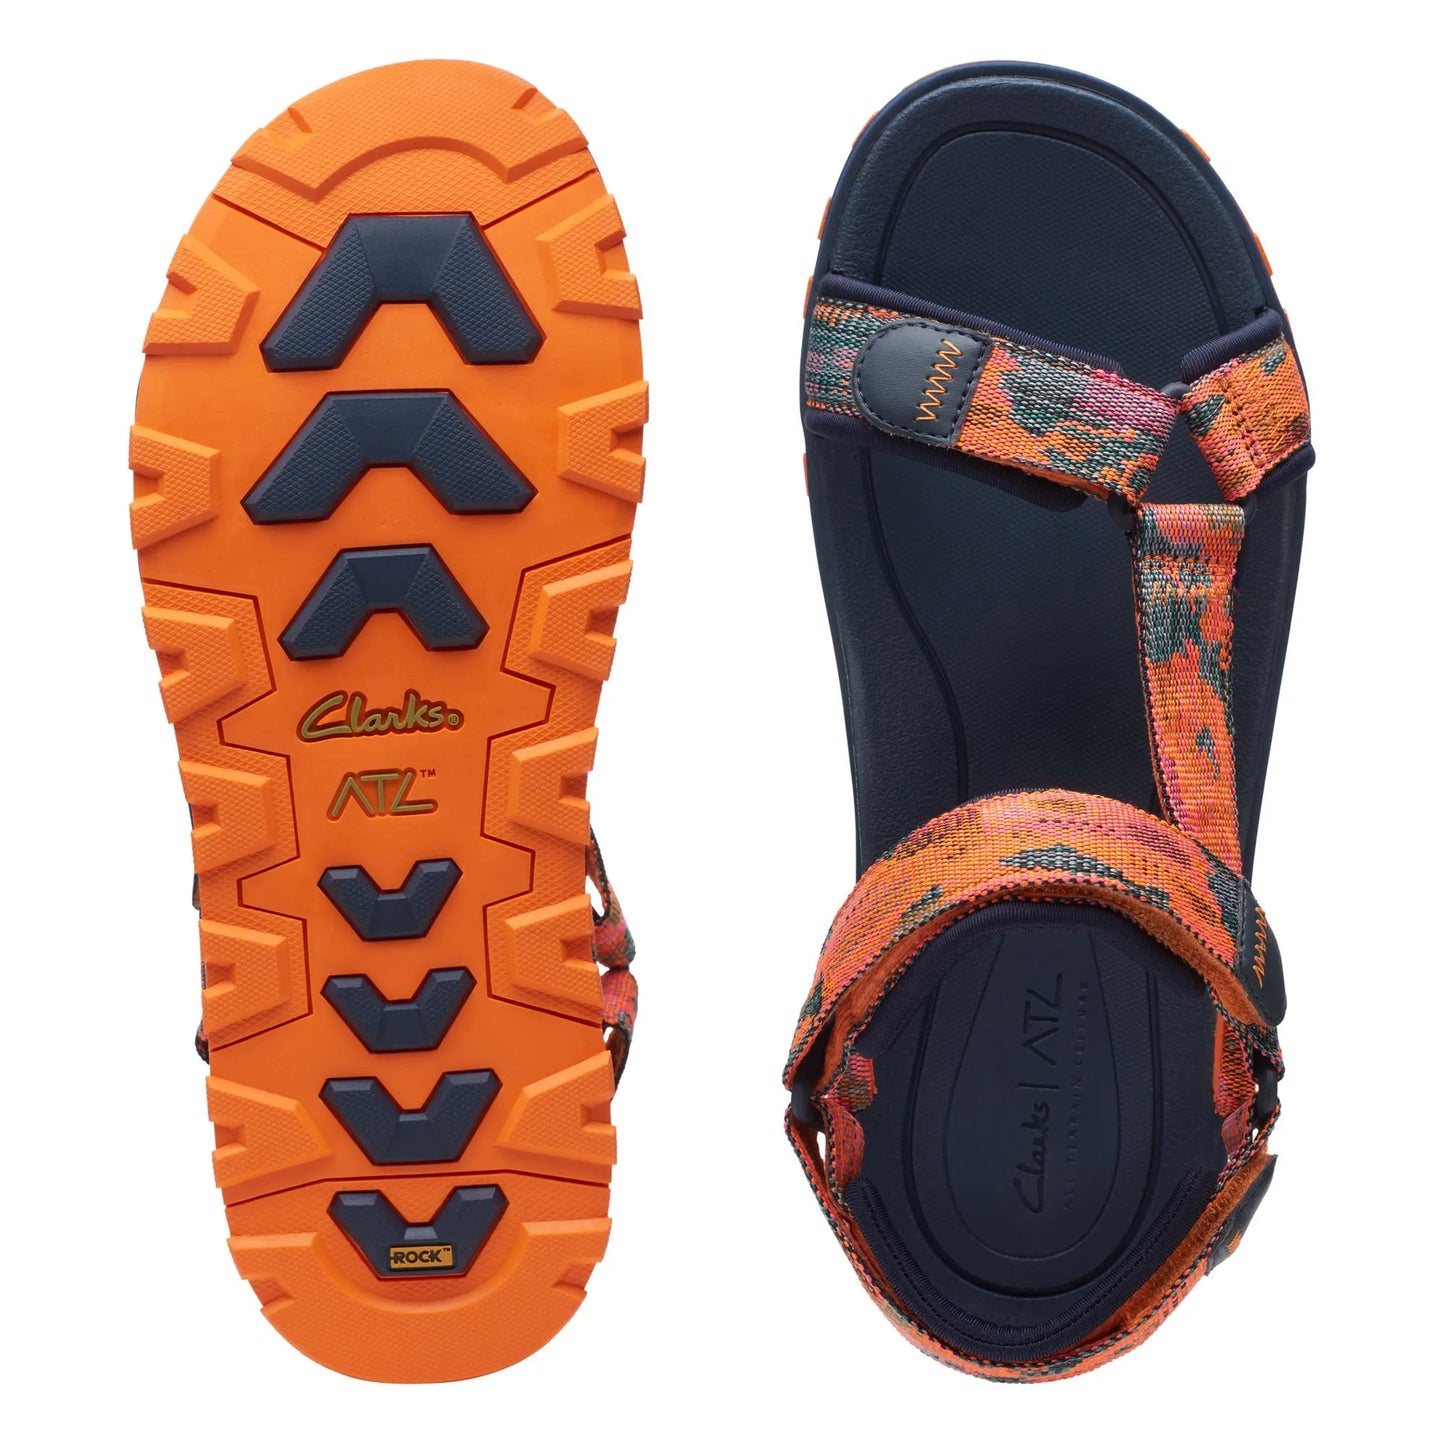 Sandalias De La Marca Clarks Para Hombre Modelo Atl Trek Sea Orange Combi En Color Naranja